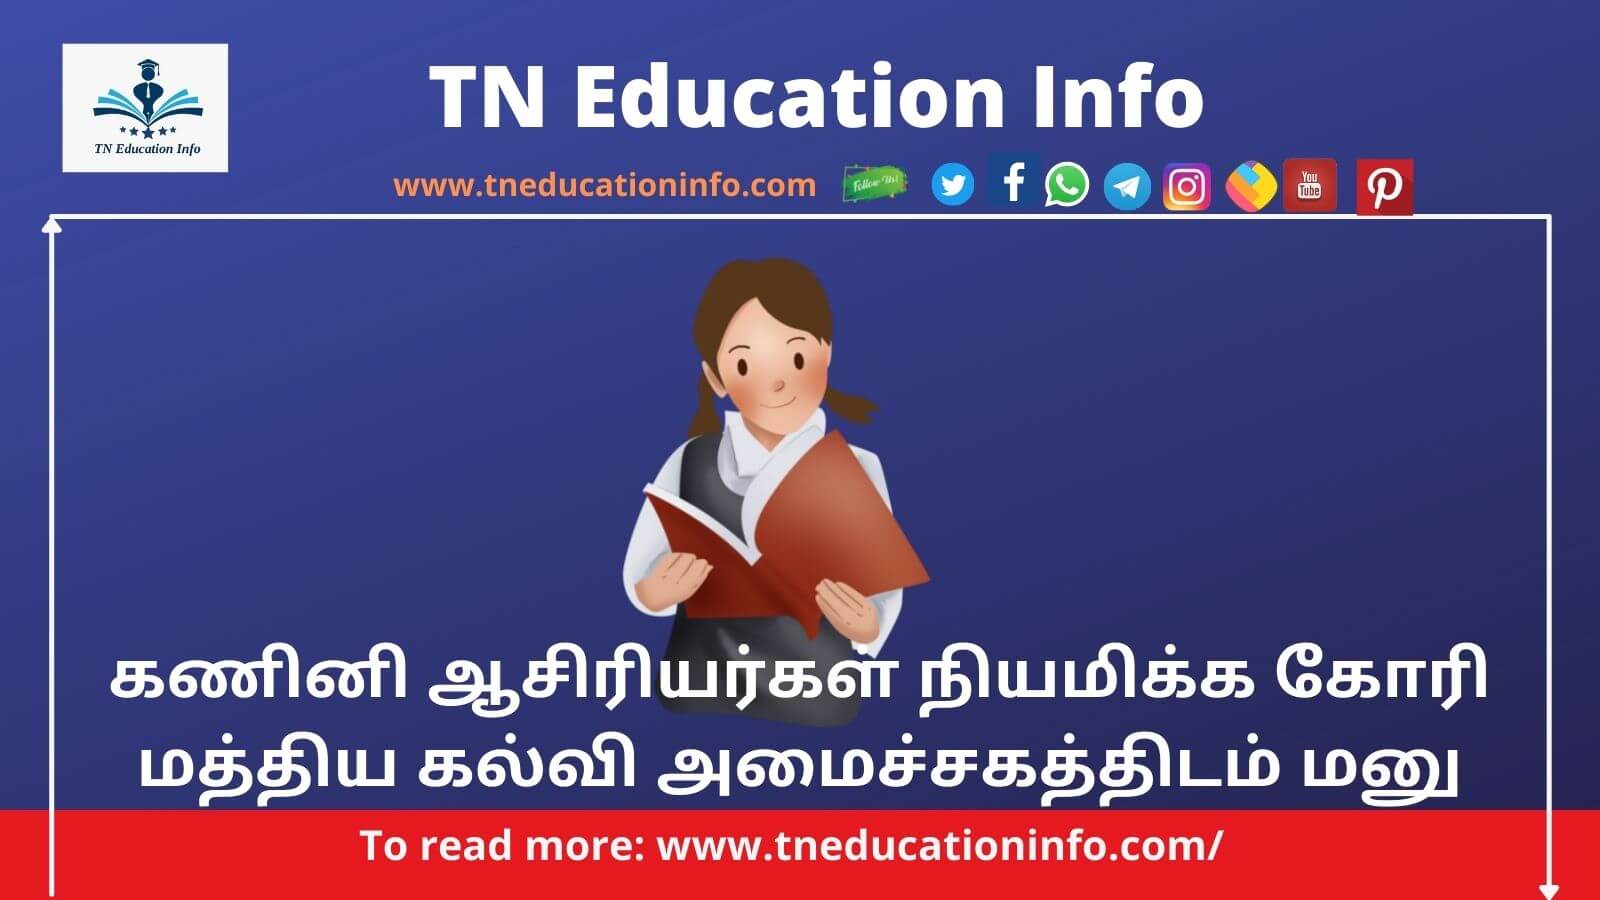 Tamil Nadu B.Ed Computer Science Unemployed Graduate Teacher Association